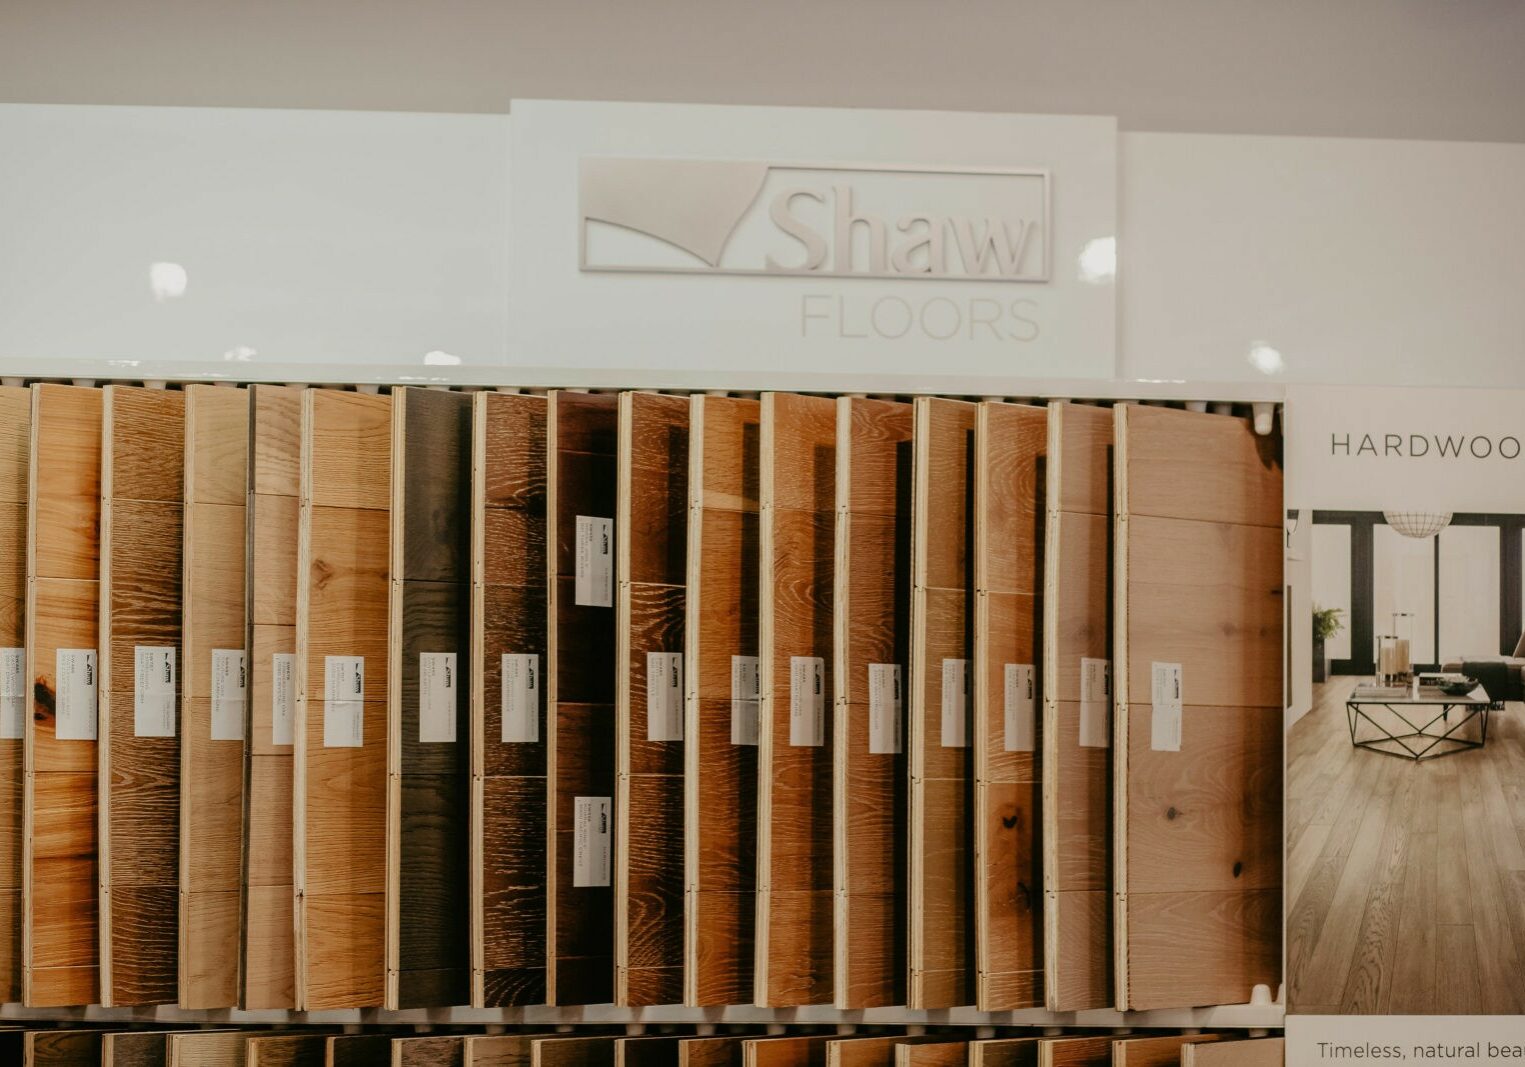 Shaw floors | BFC Flooring Design Centre